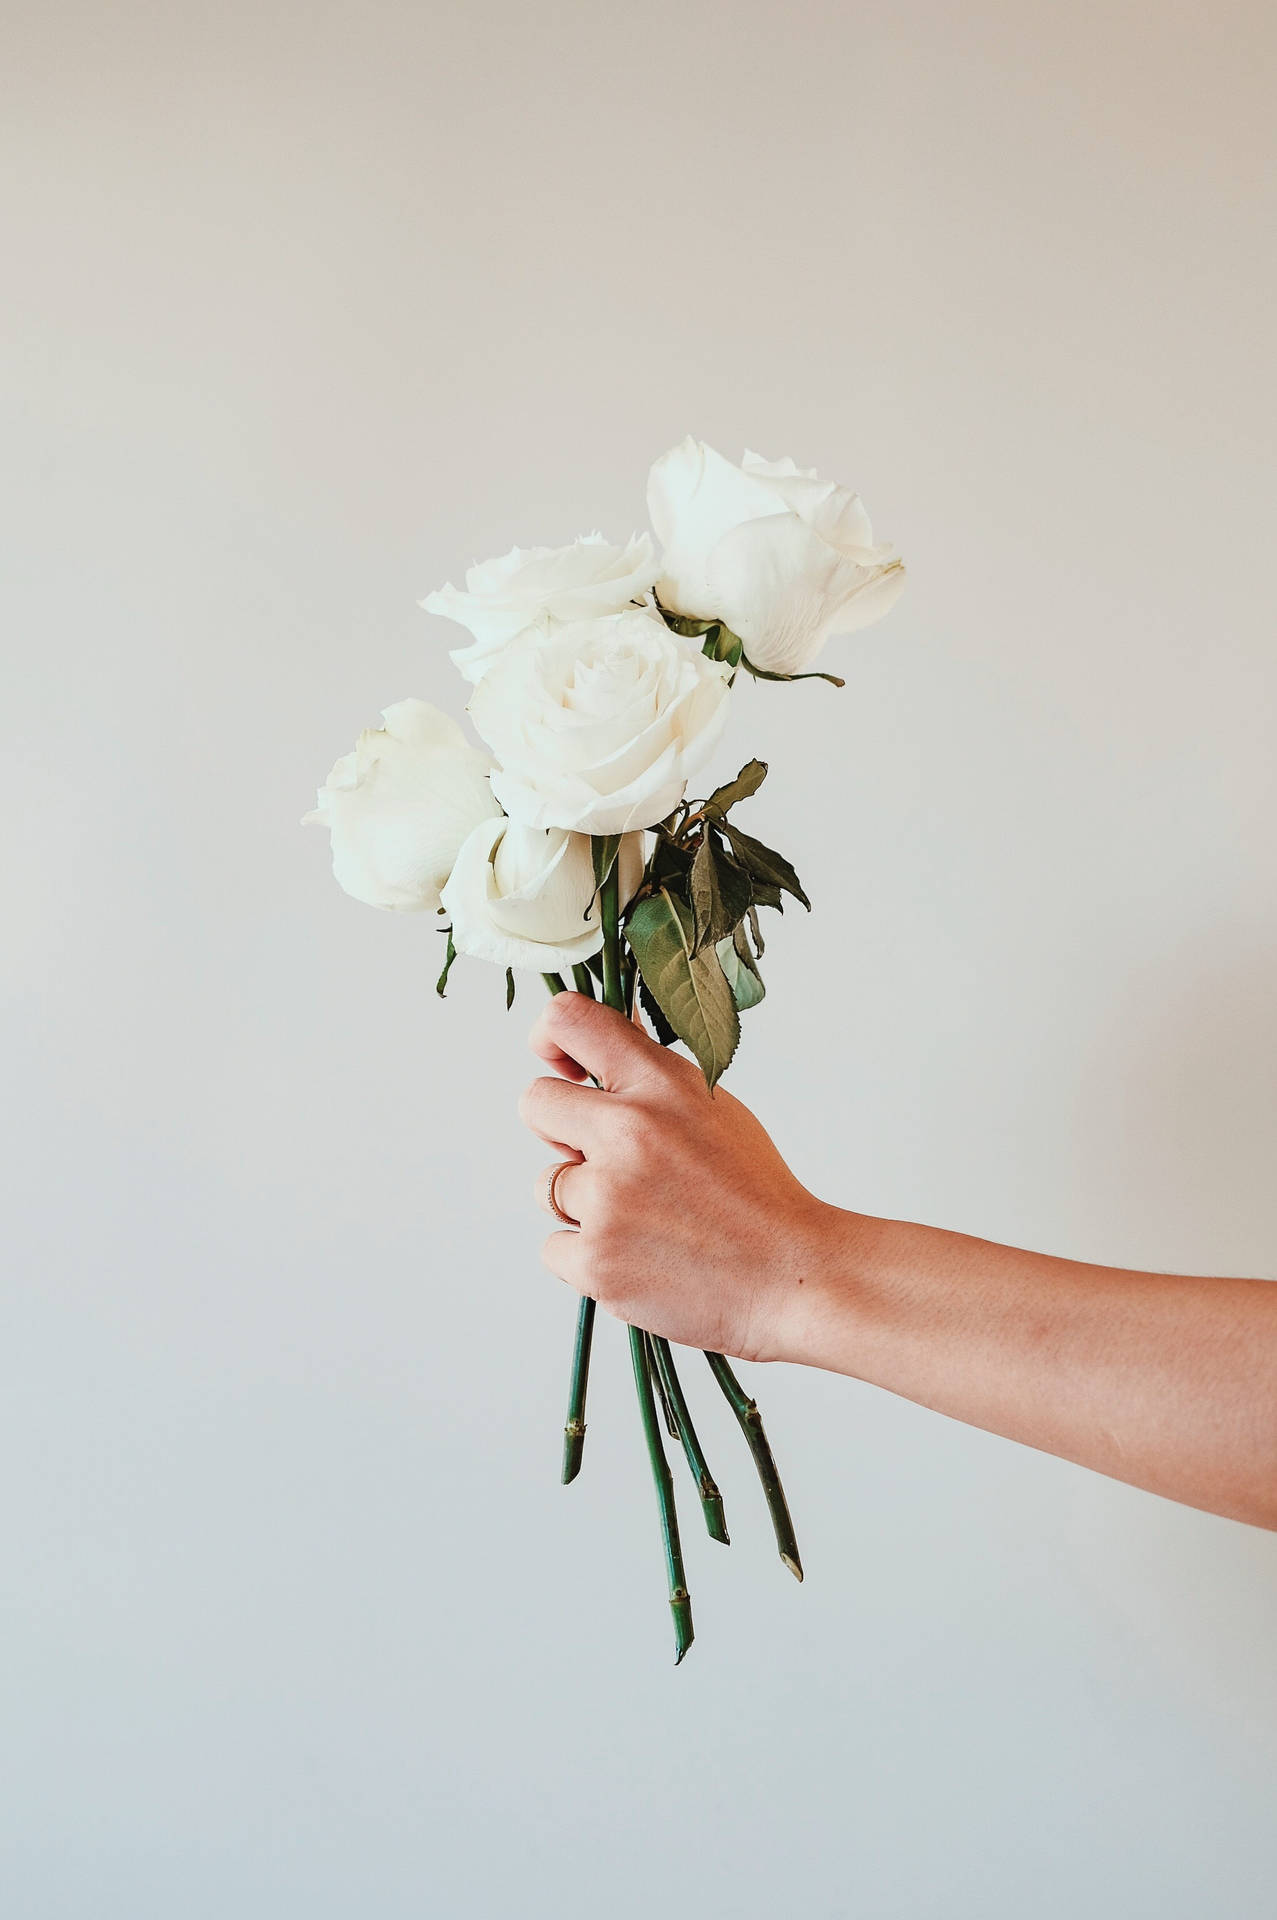 Caption: Striking White Rose Bouquet Wallpaper